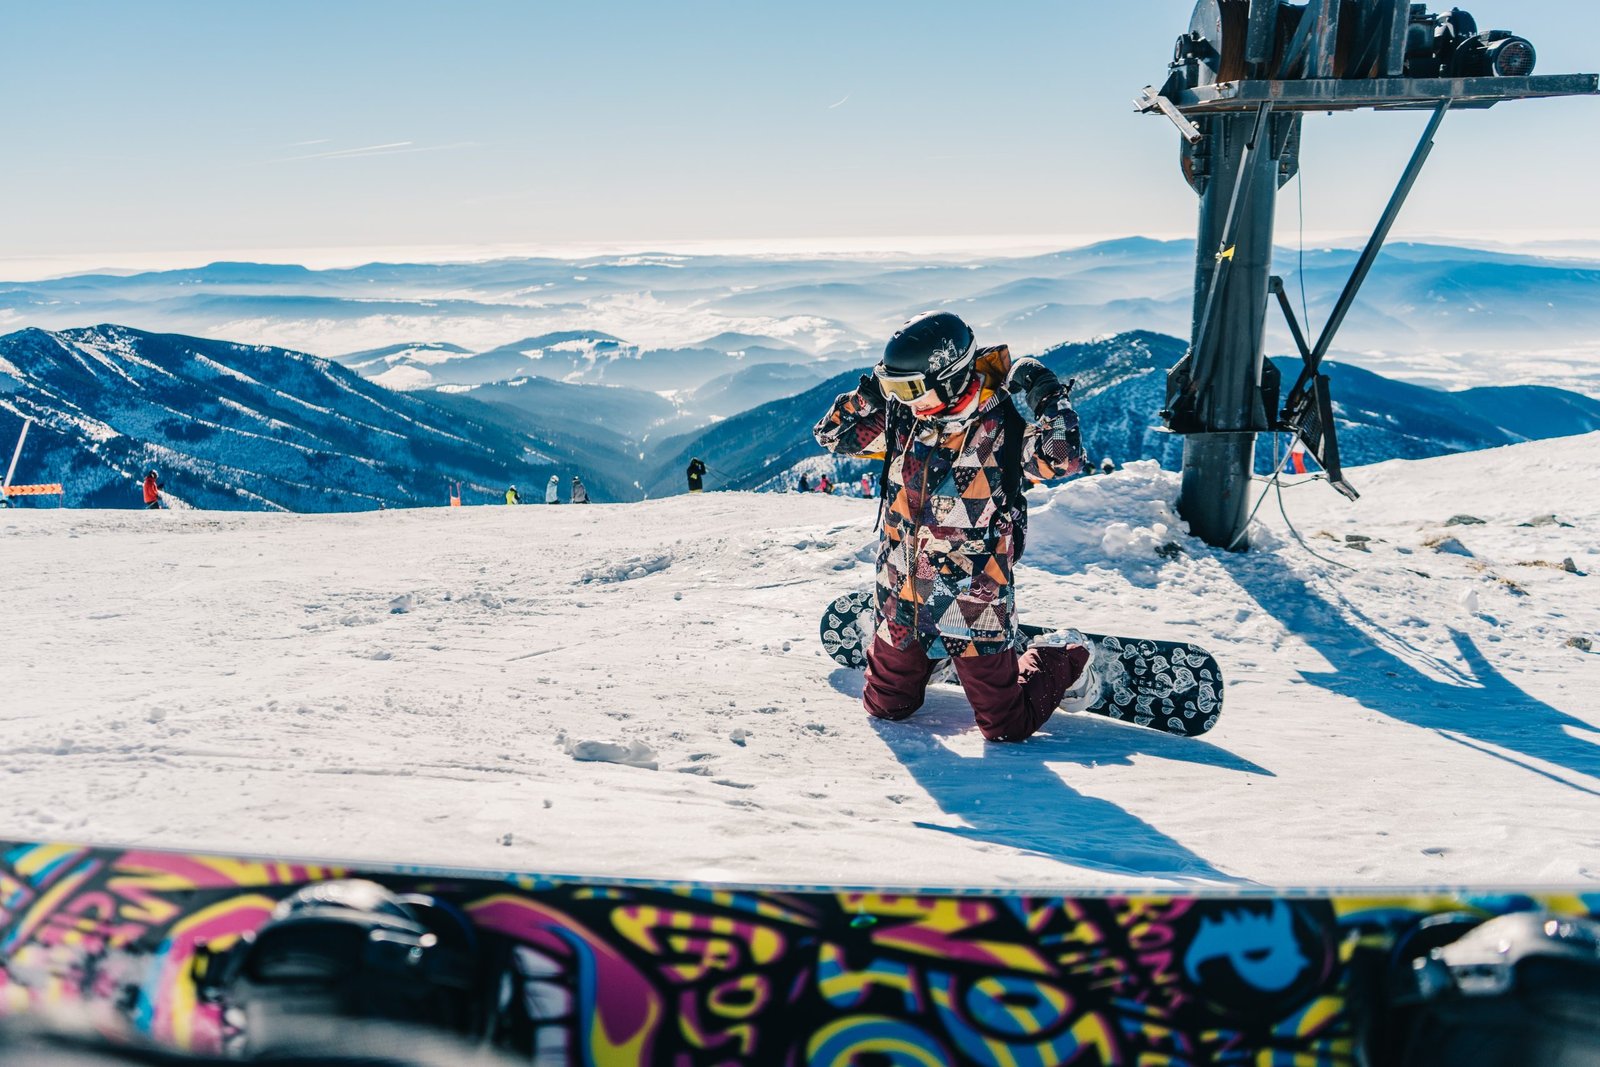 Snowboarding gear for kids - Arcticd